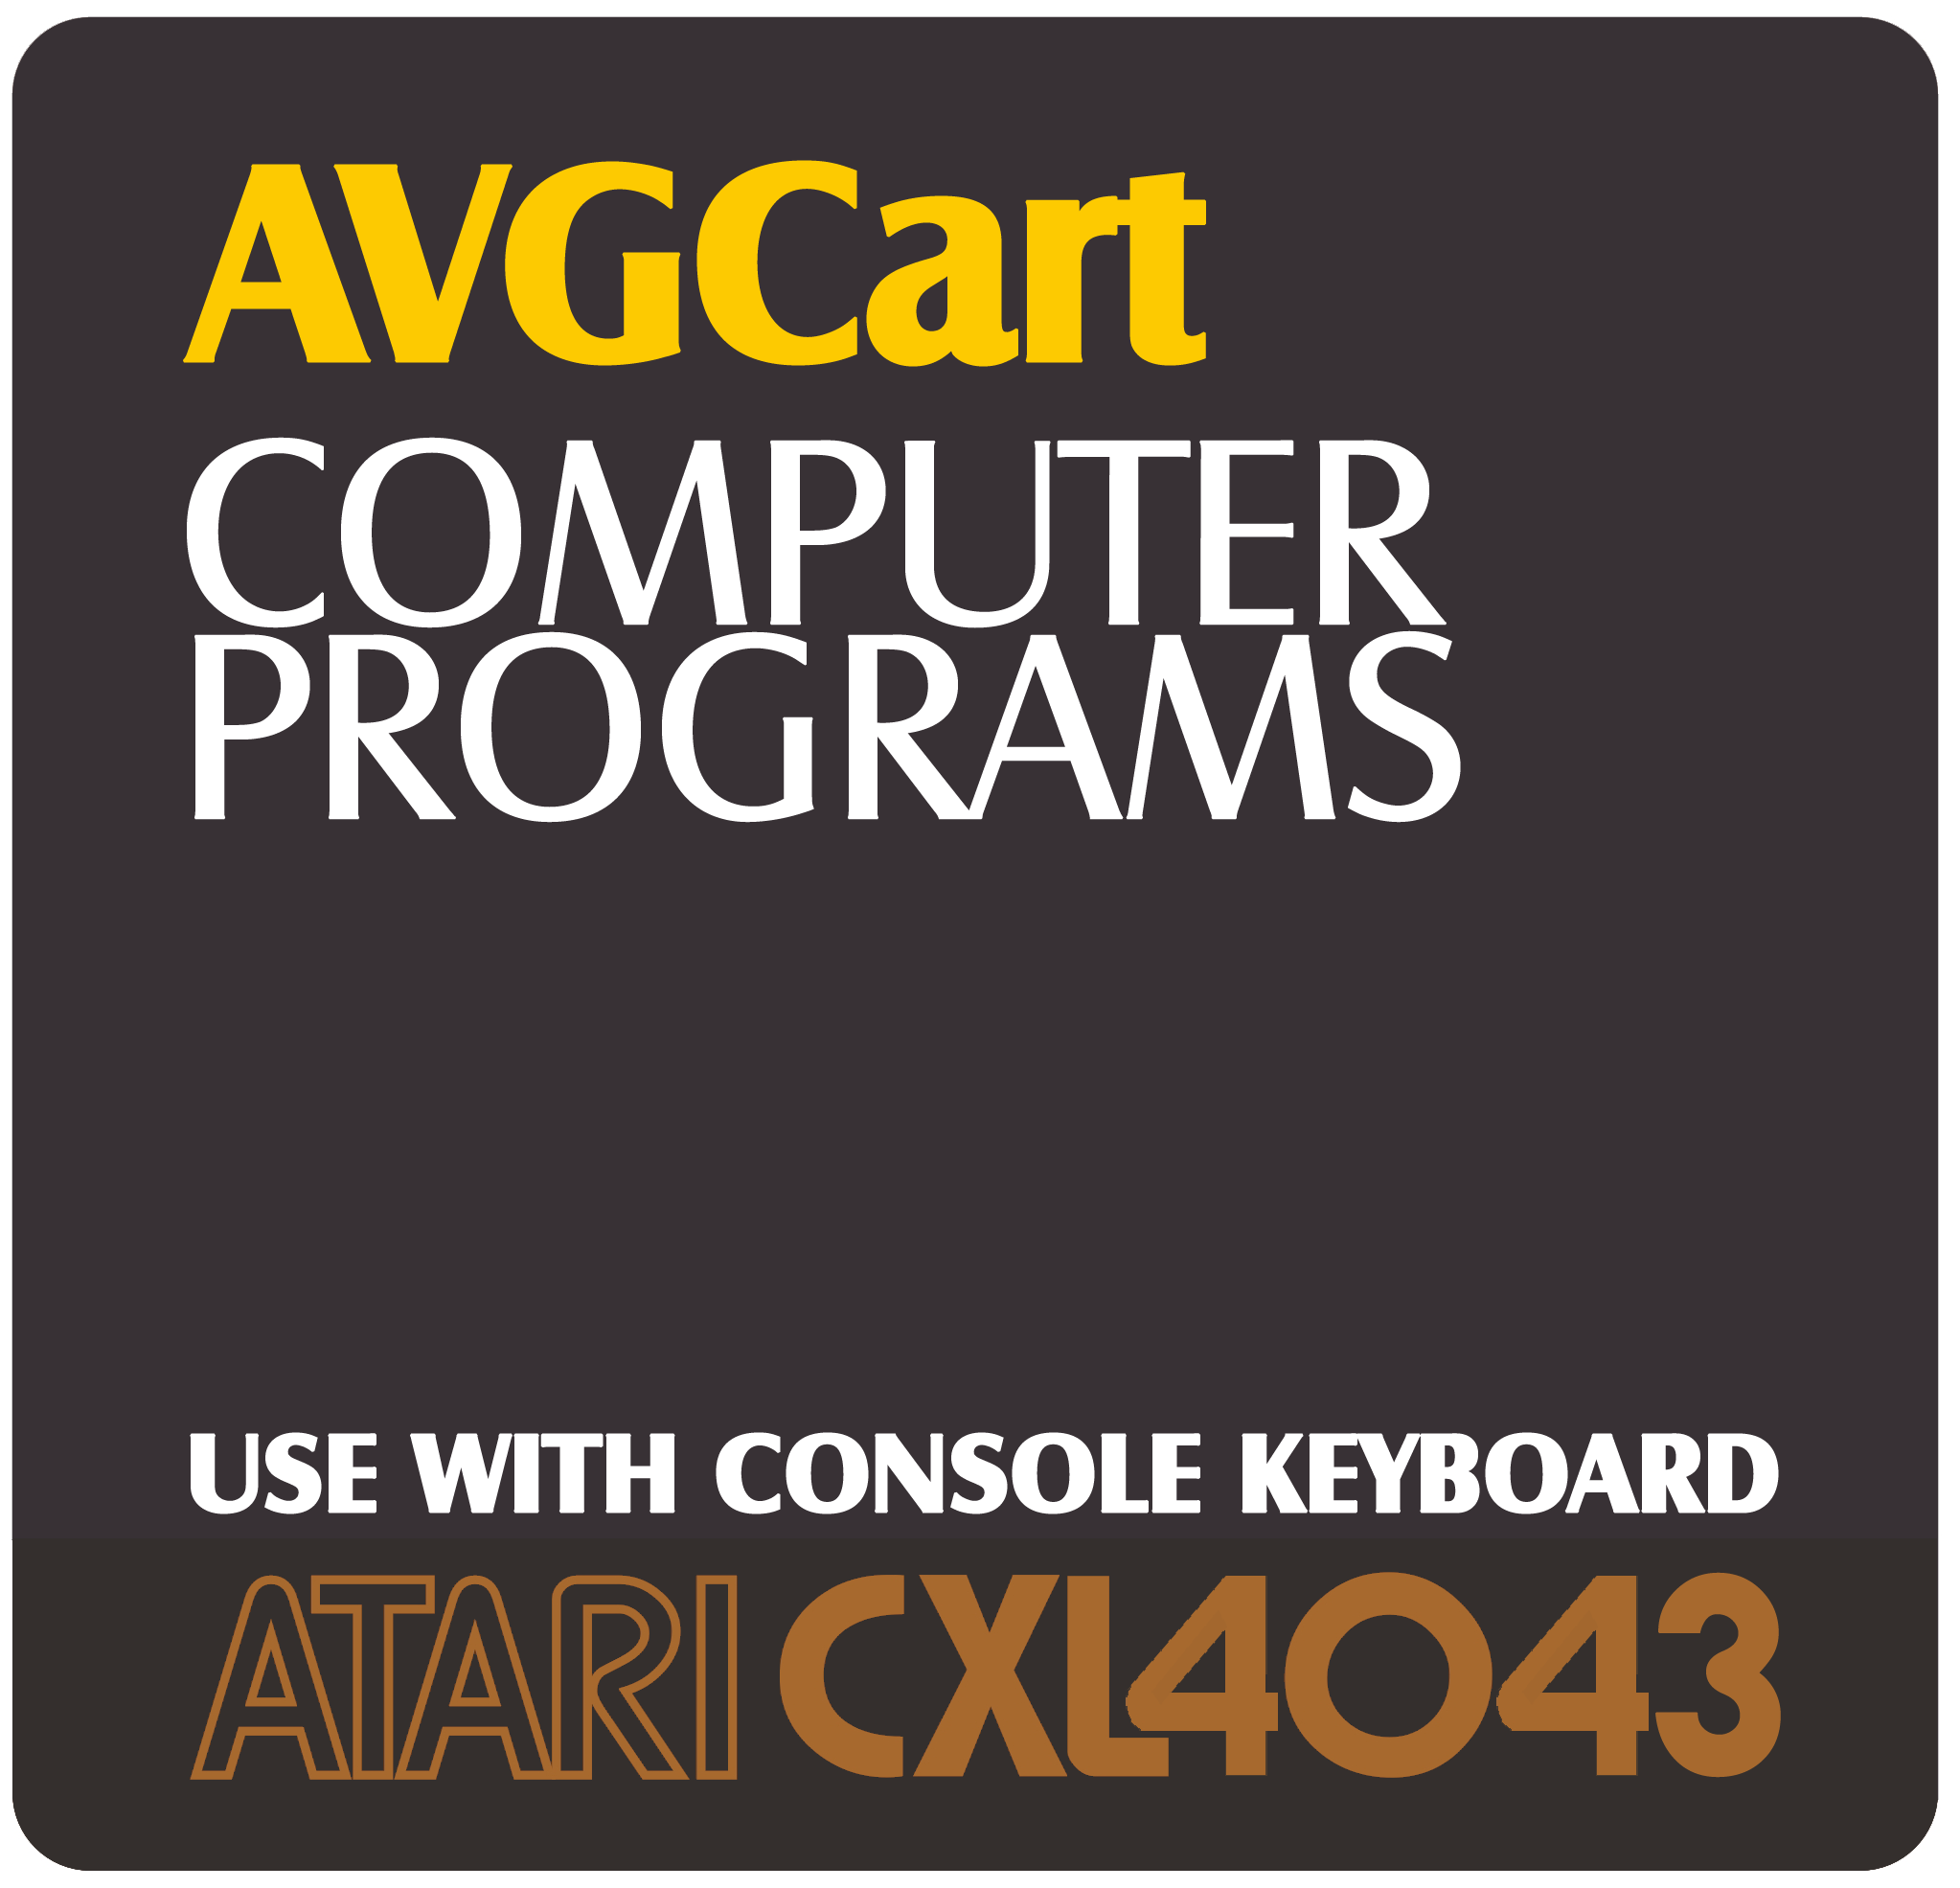 AVGCart_COMPUTERPROGRAMS_CONSOLE_KEYBOAR